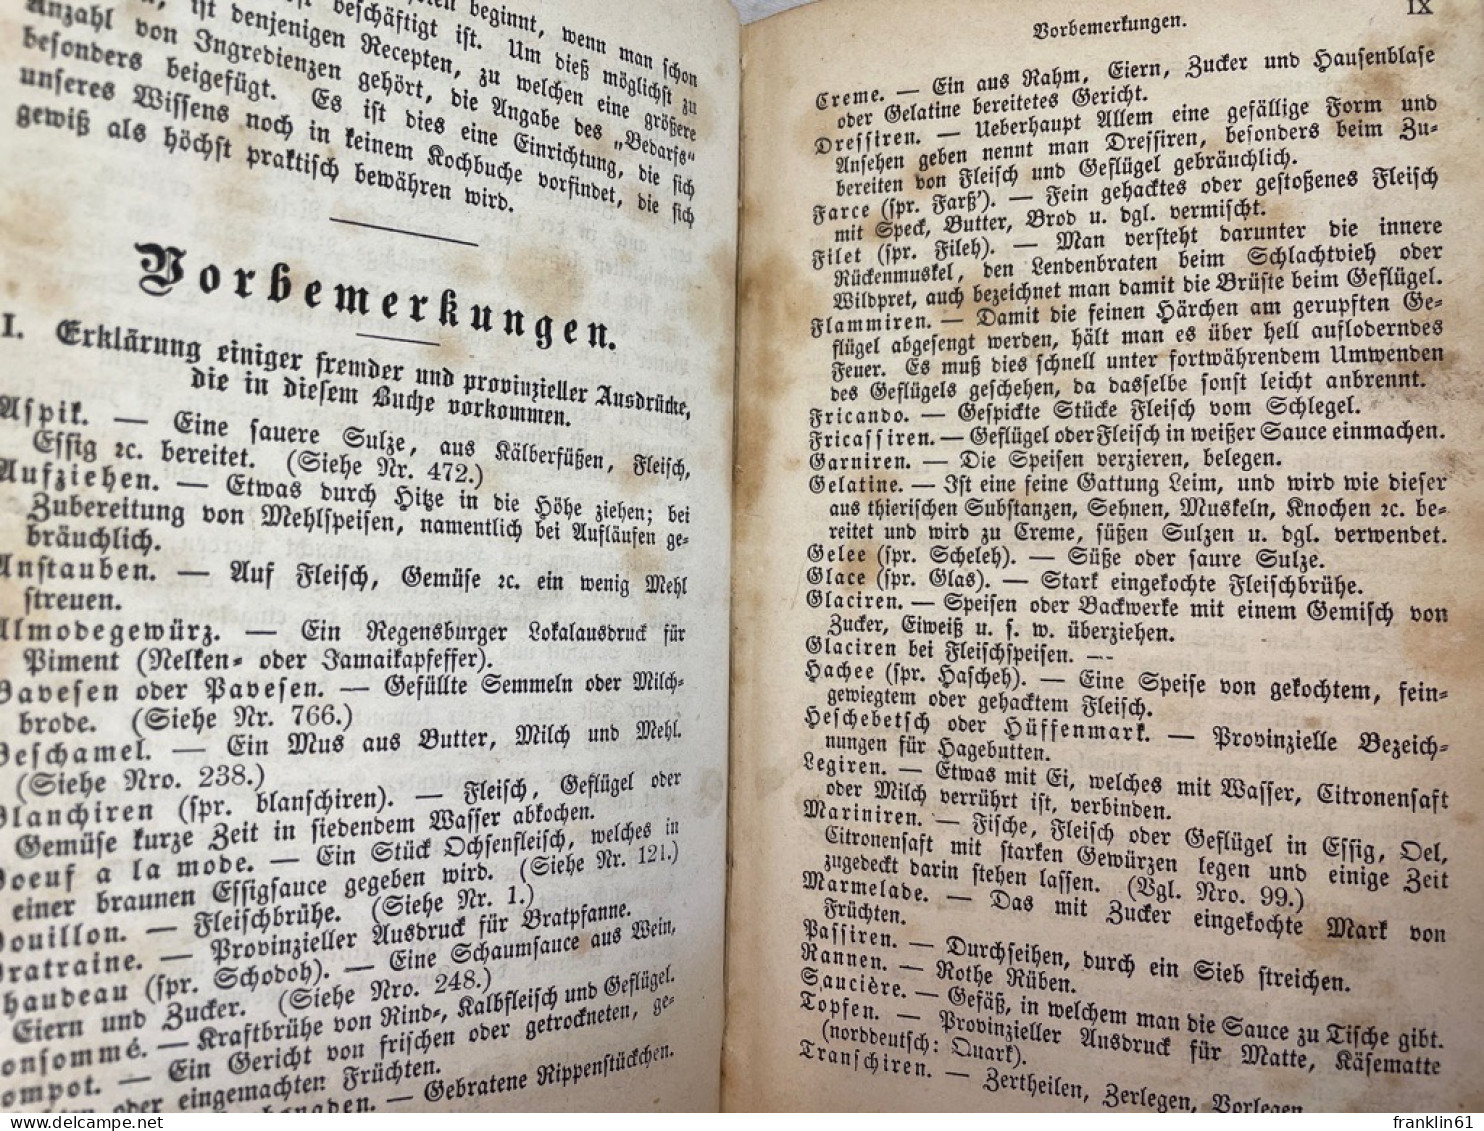 Regensburger Kochbuch. - Essen & Trinken